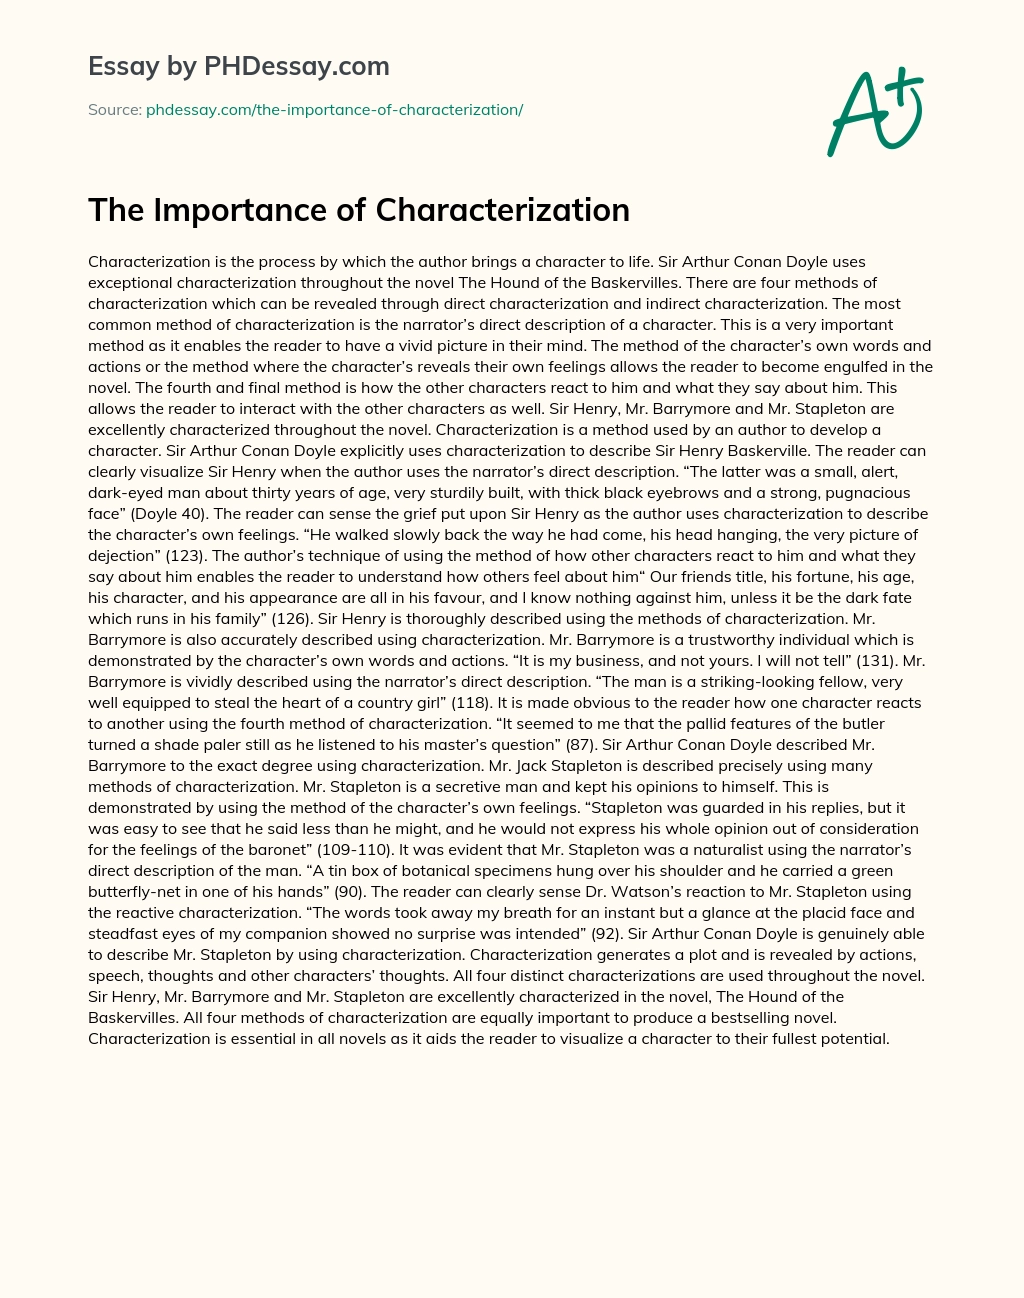 importance of characterization essay